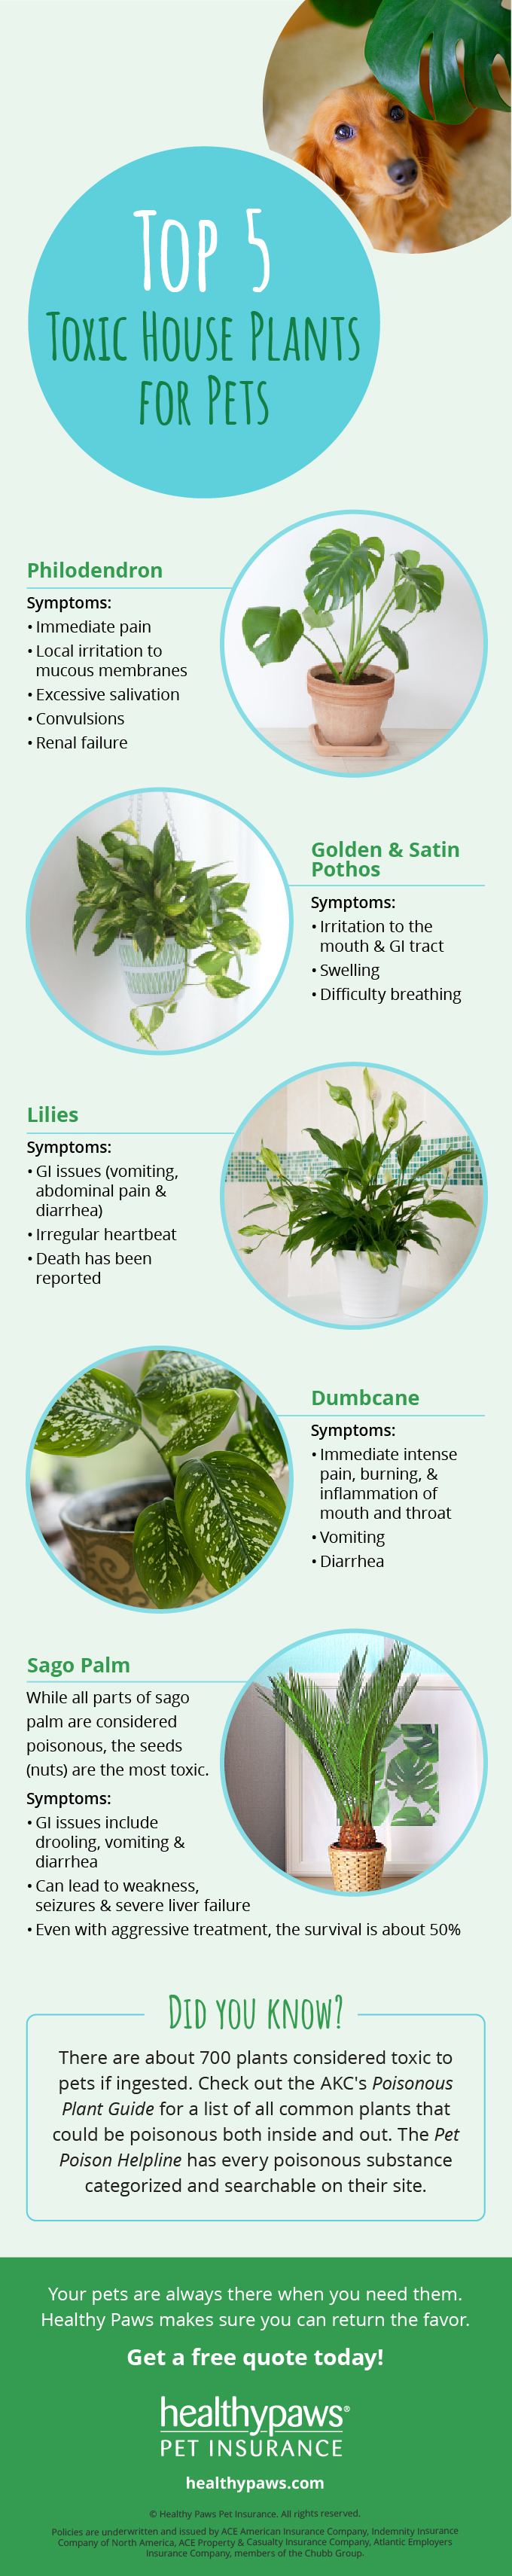 5 toxic house plants infographic